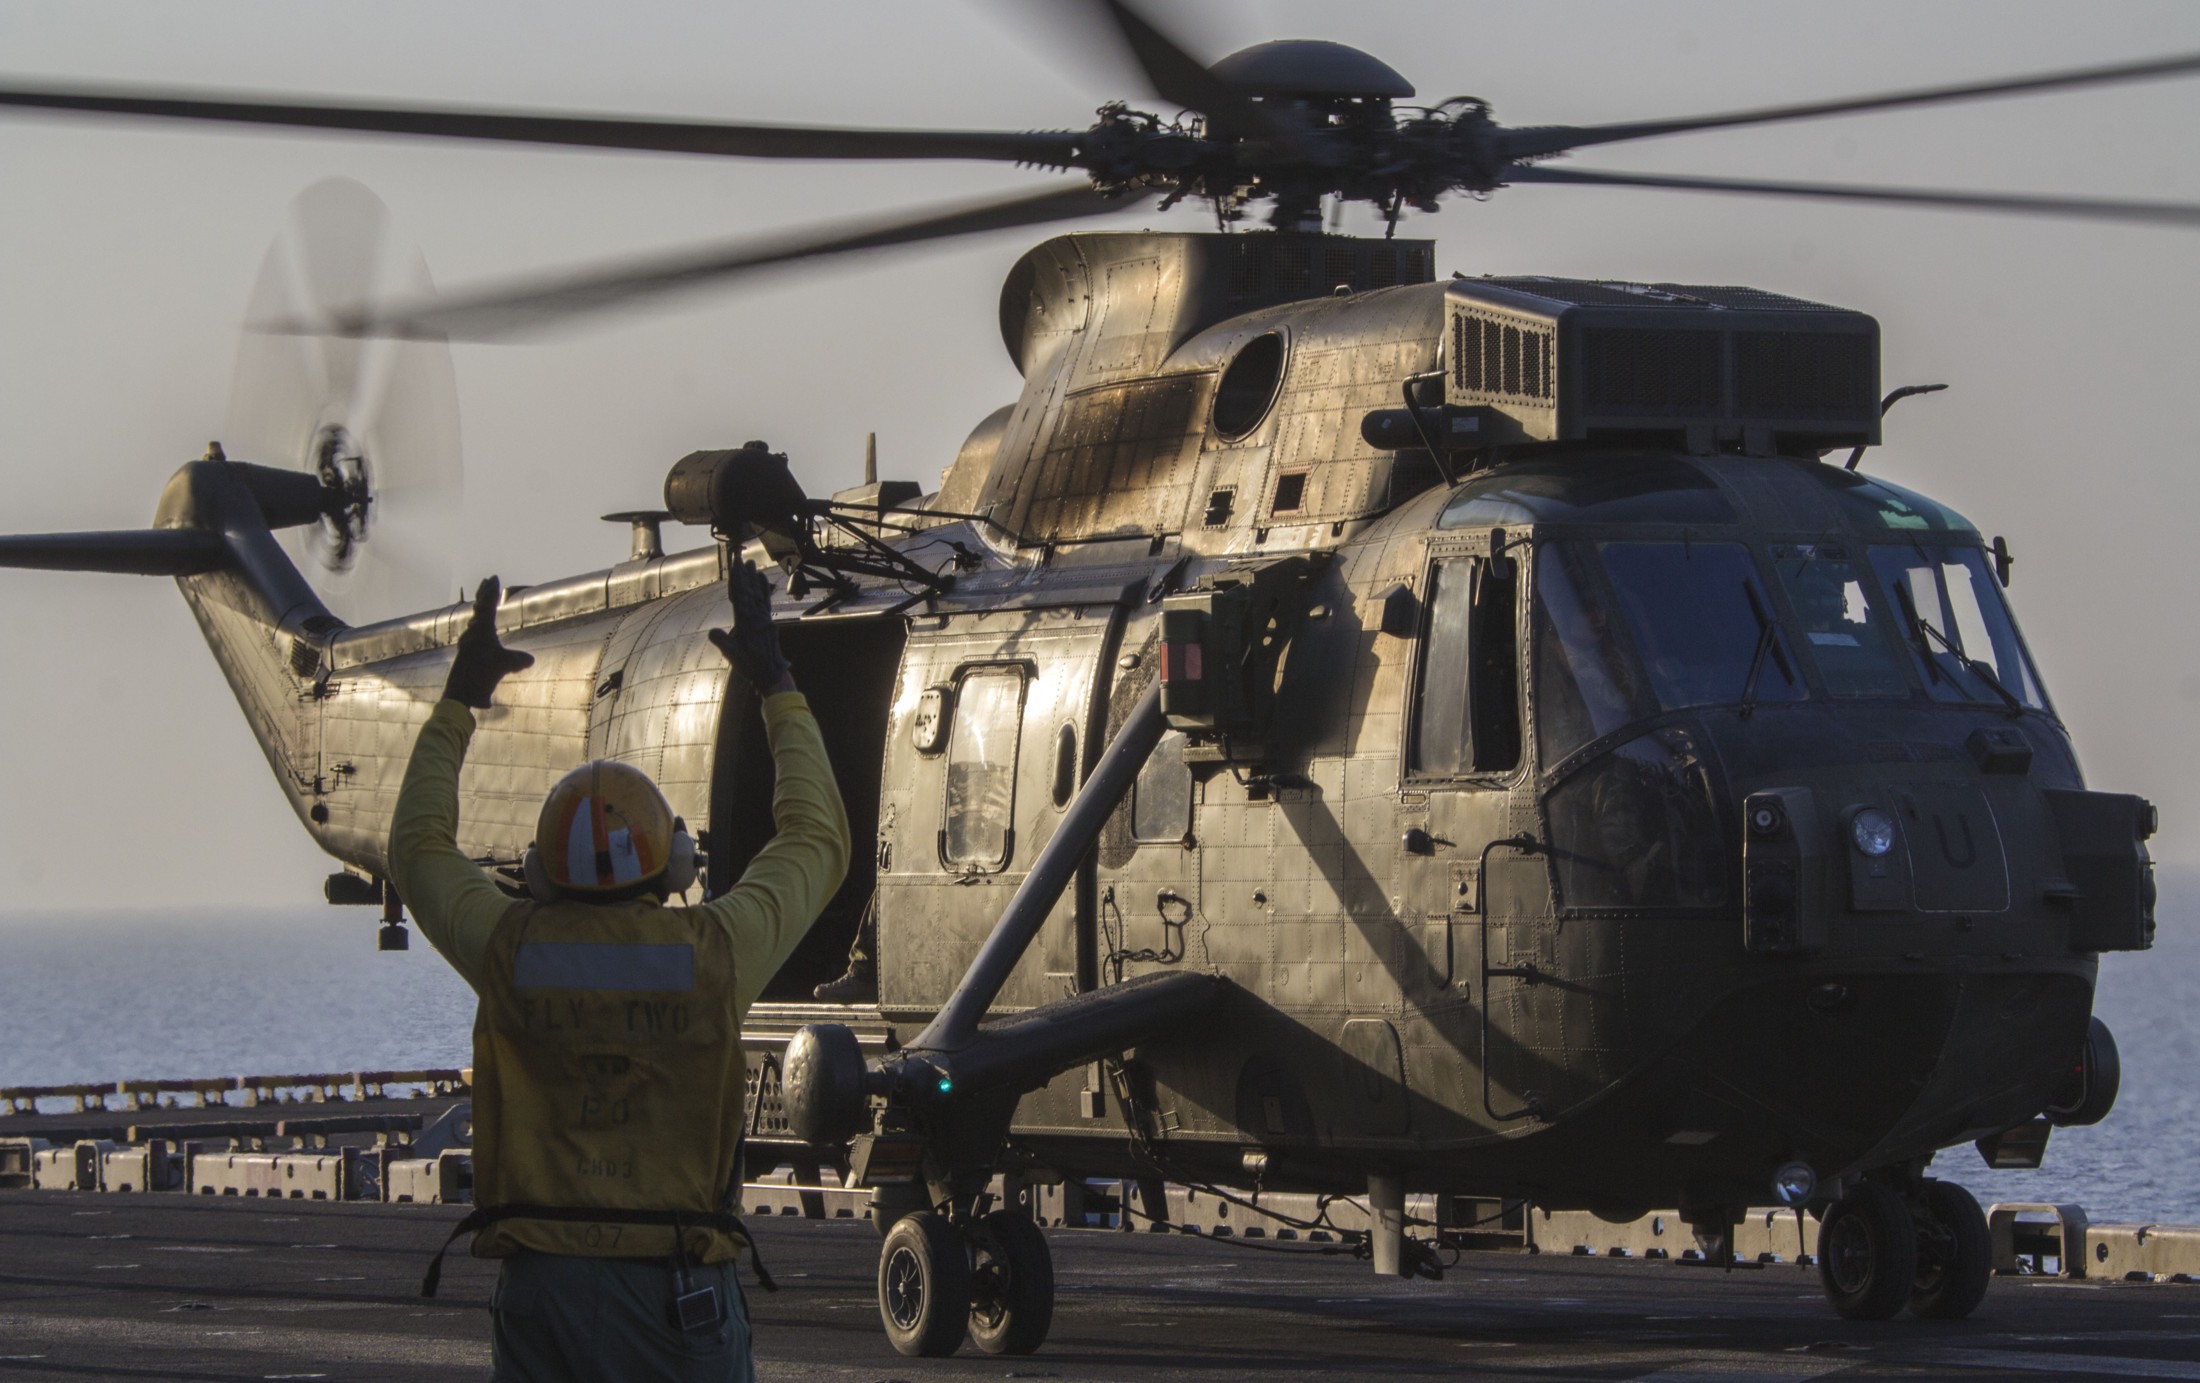 sea king hc.4 helicopter royal navy commando assault marines westland nas squadron rnas 48